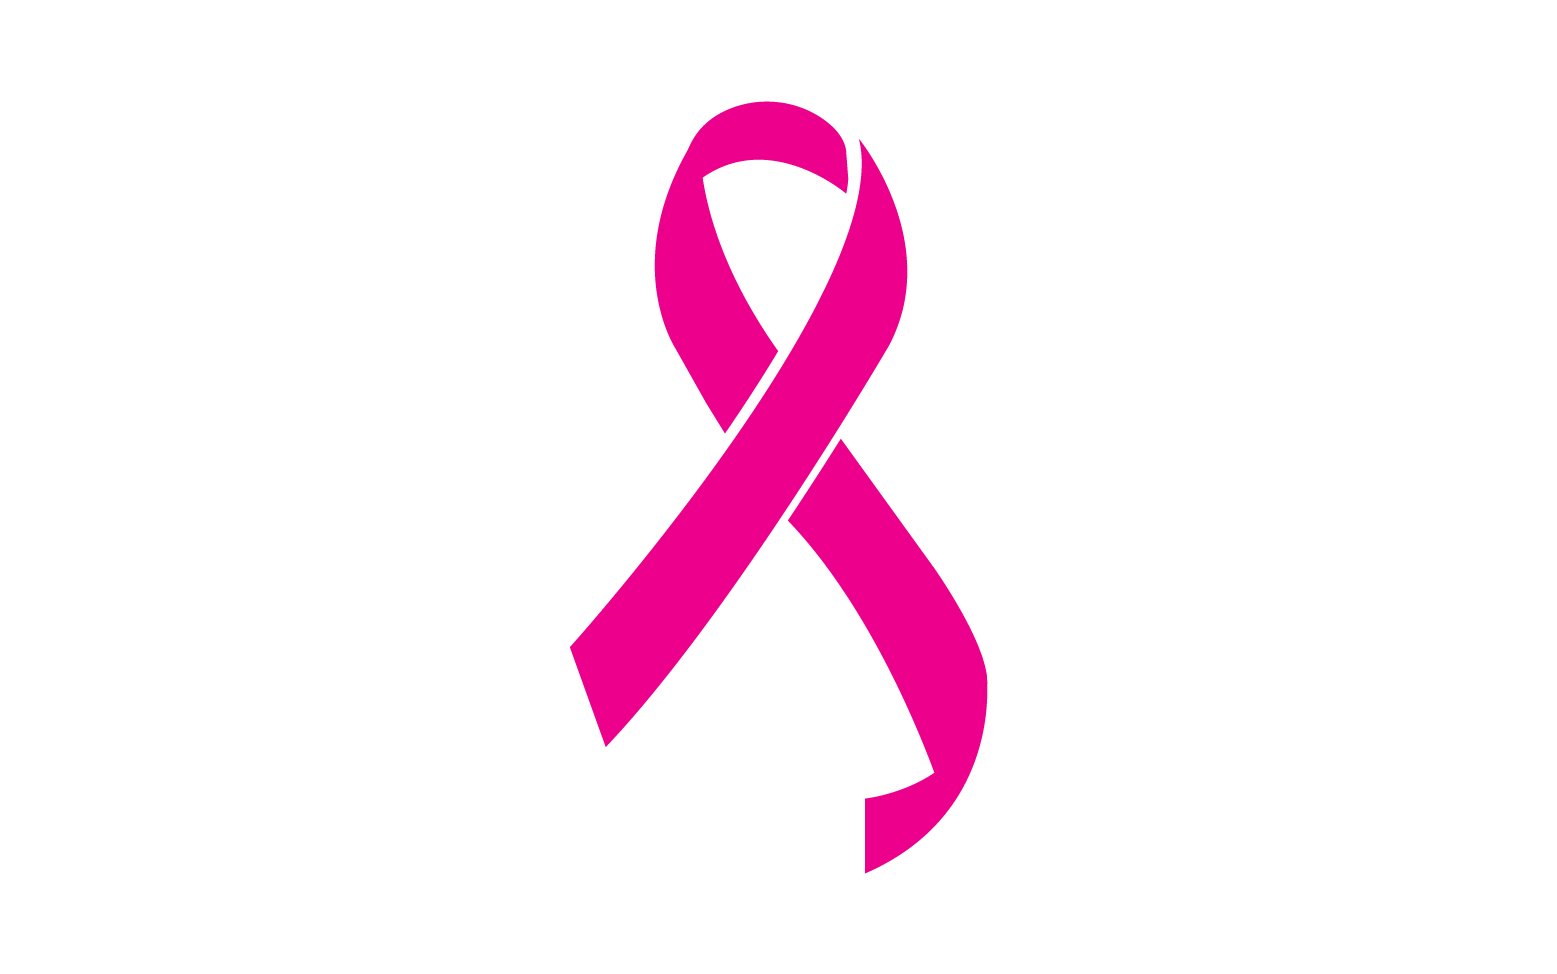 Ribbon pink icon logo element version v51